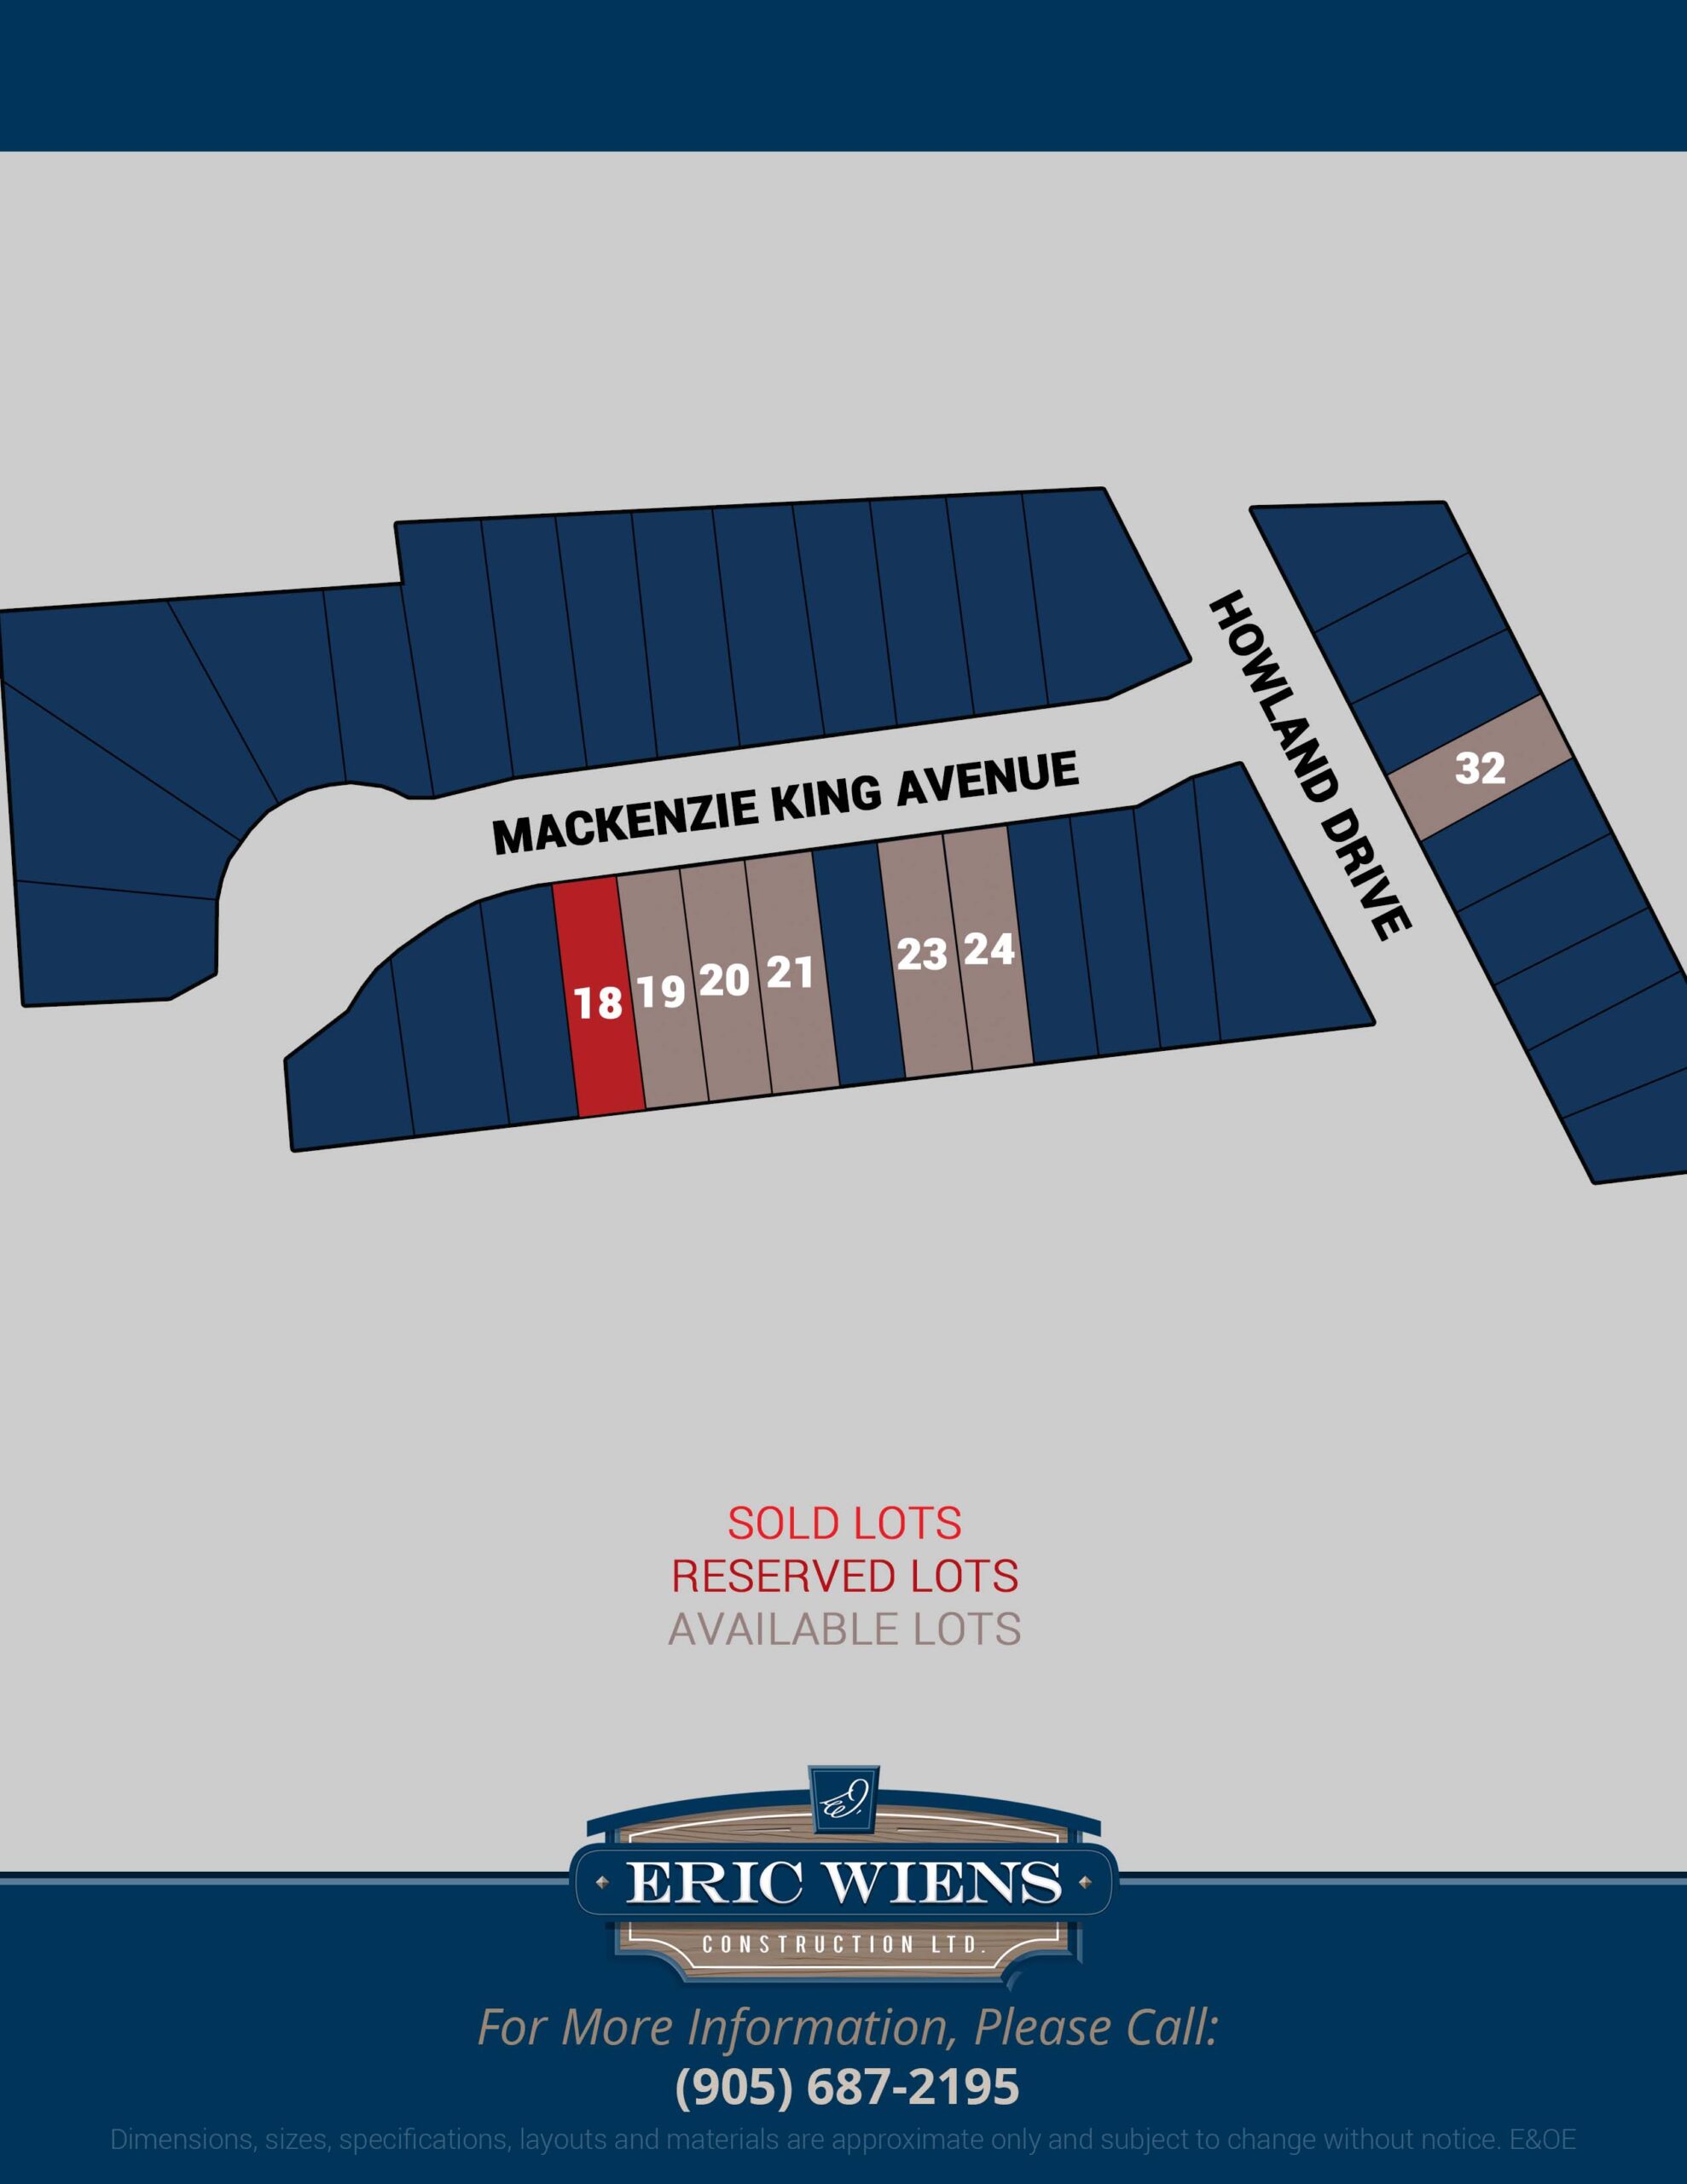 Lot 19 Mackenzie King Avenue Site Plan